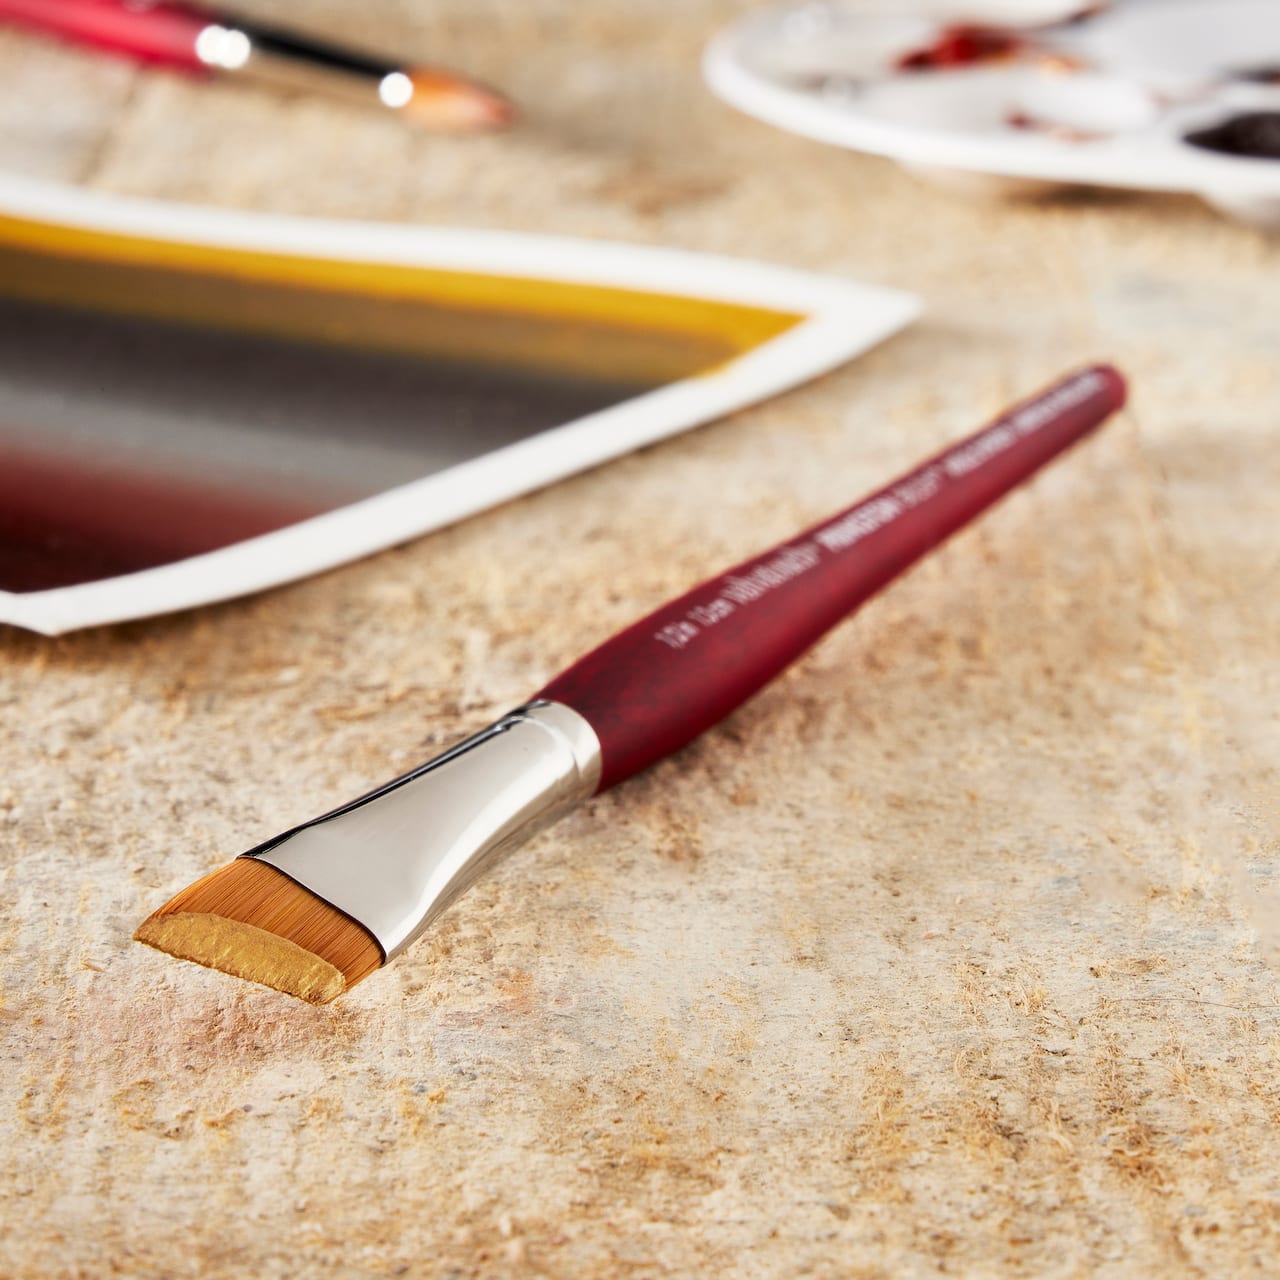 Princeton™ Velvetouch™ Series 3950 Angle Shader Brush